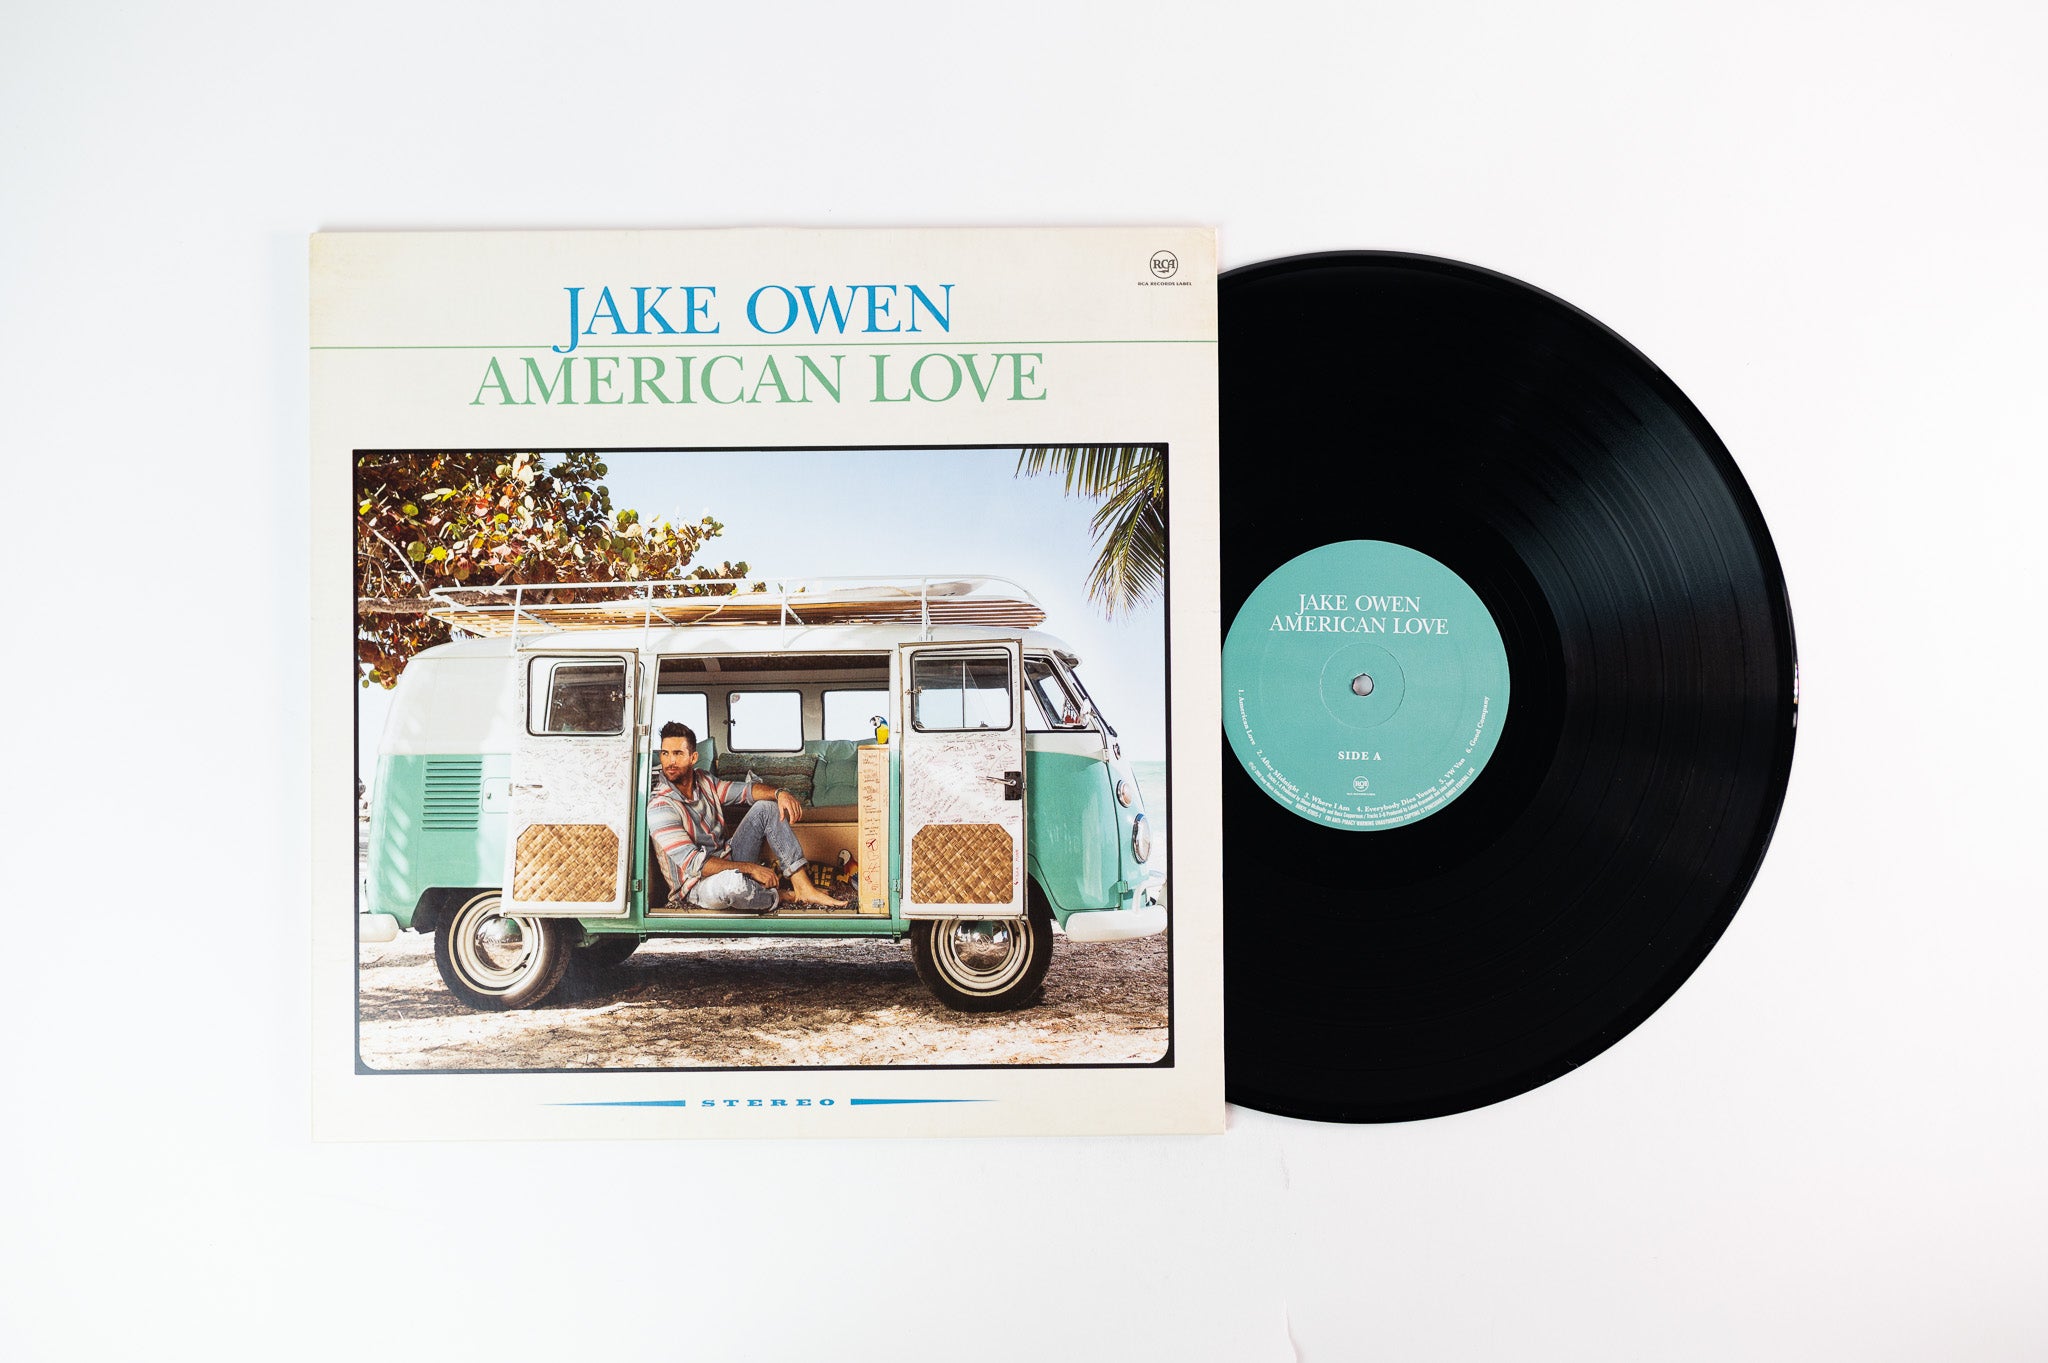 Jake Owen - American Love on RCA